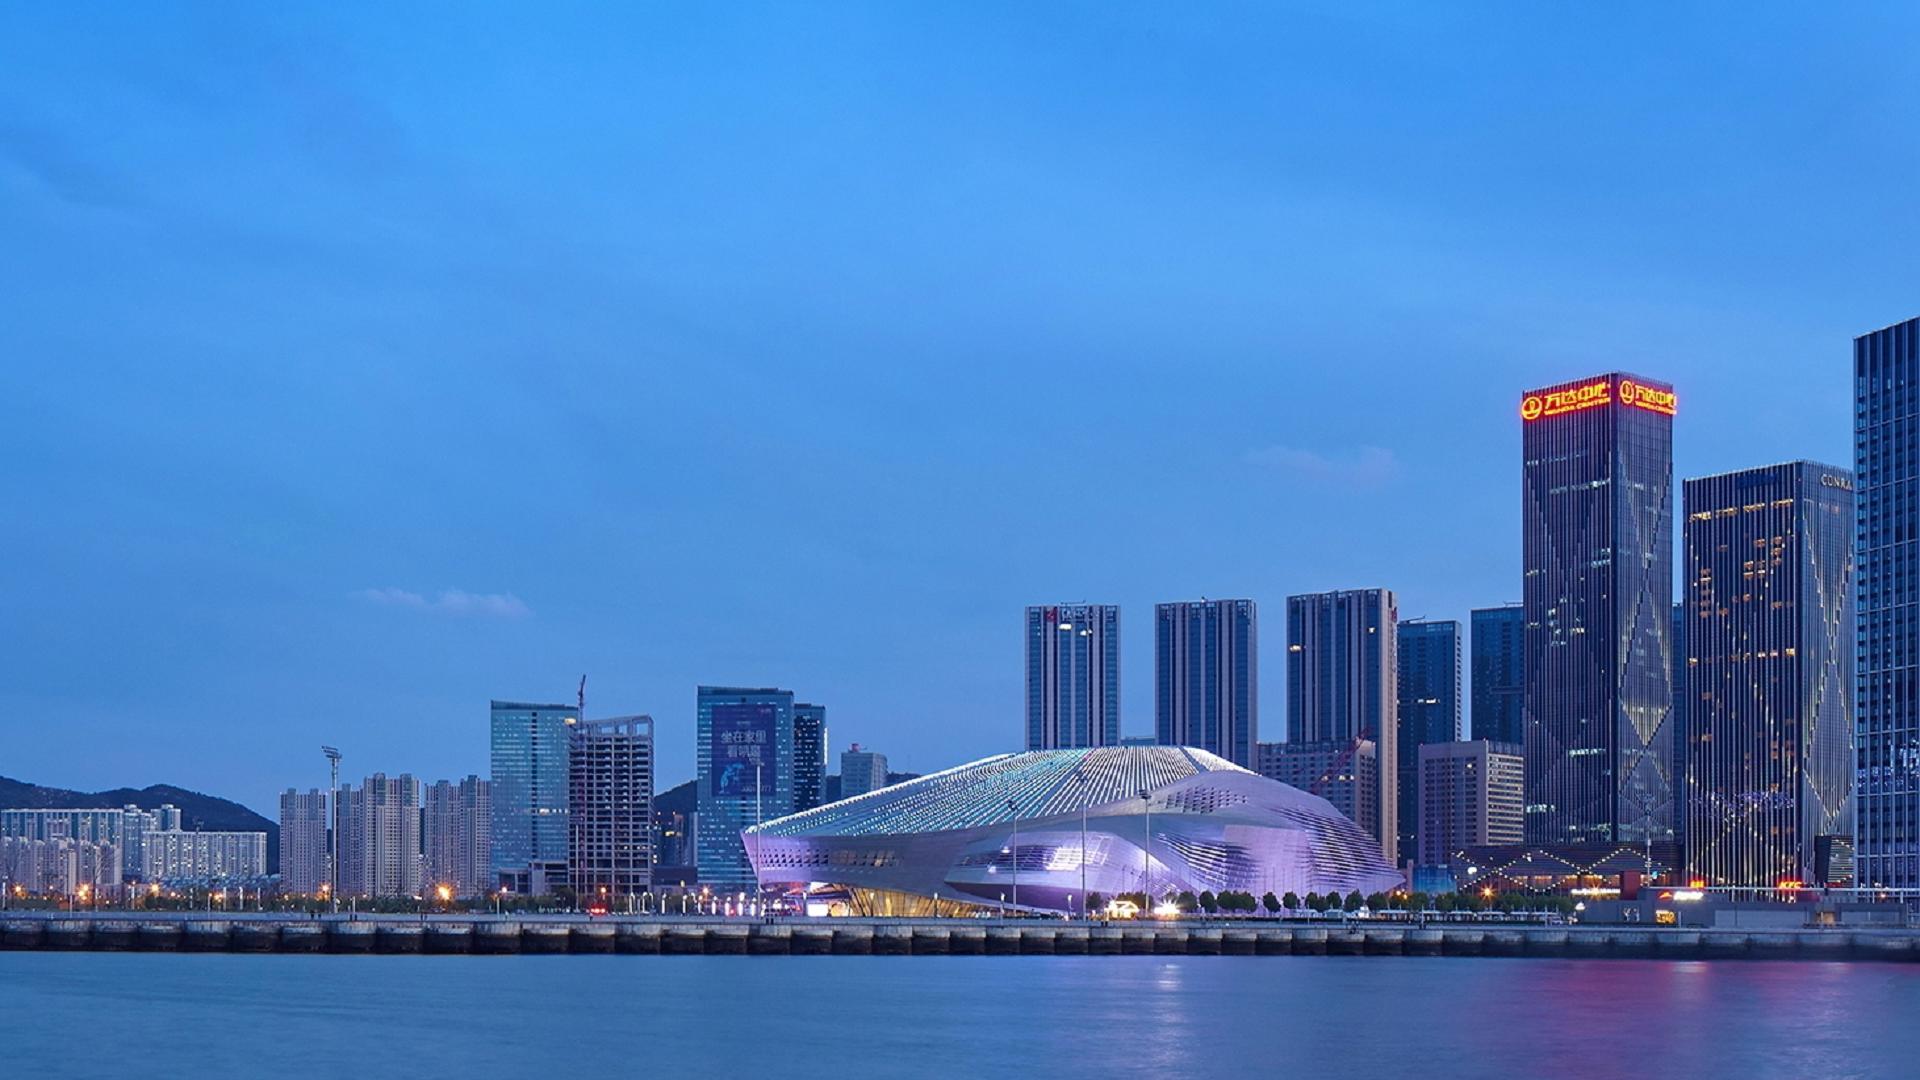 Dalian International Convention Center and Wanda Center